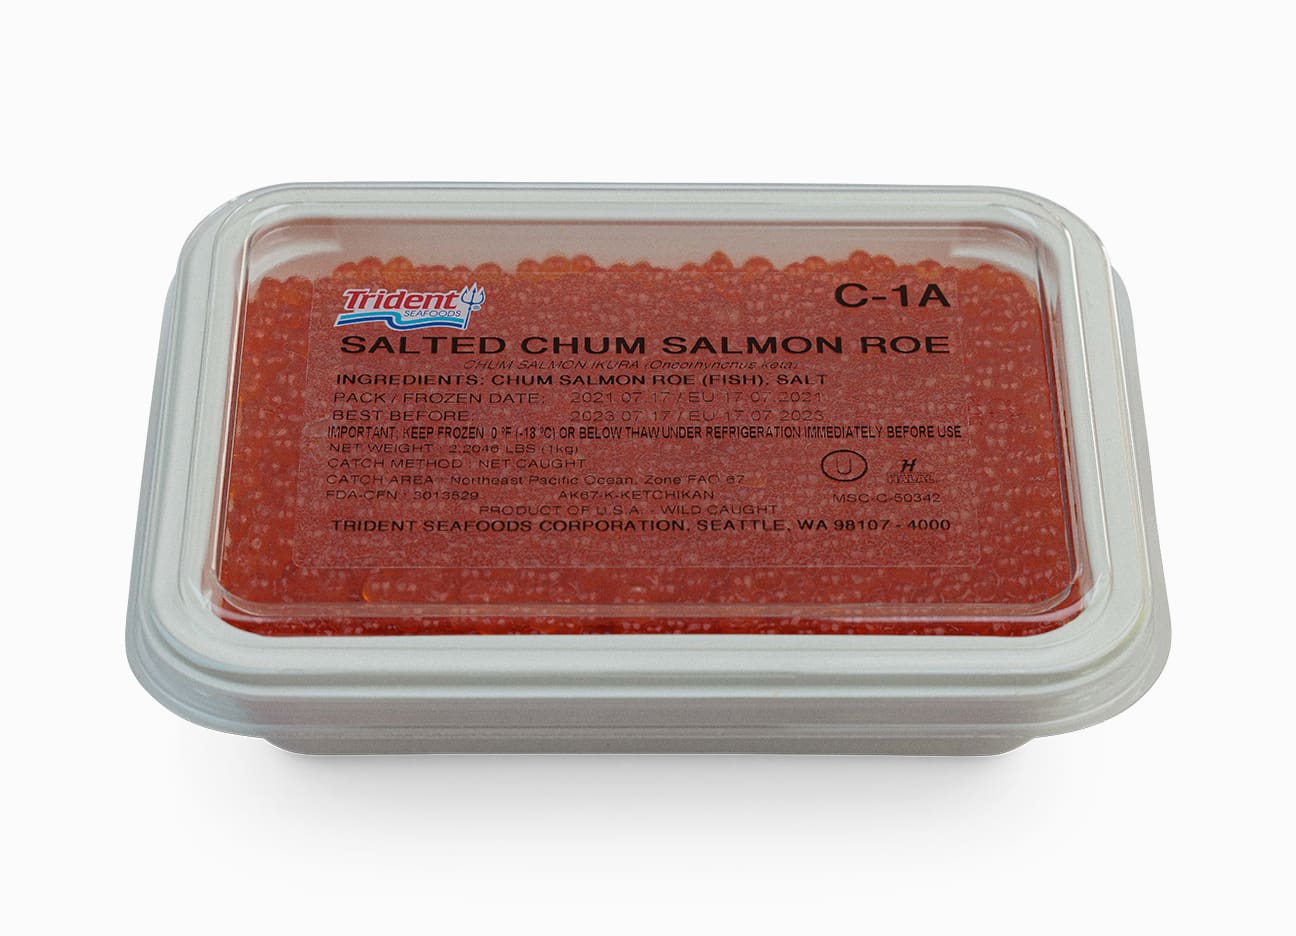 Wild Alaskan Salmon Chum Red Caviar Trident C-1A 35.2 oz in a package.